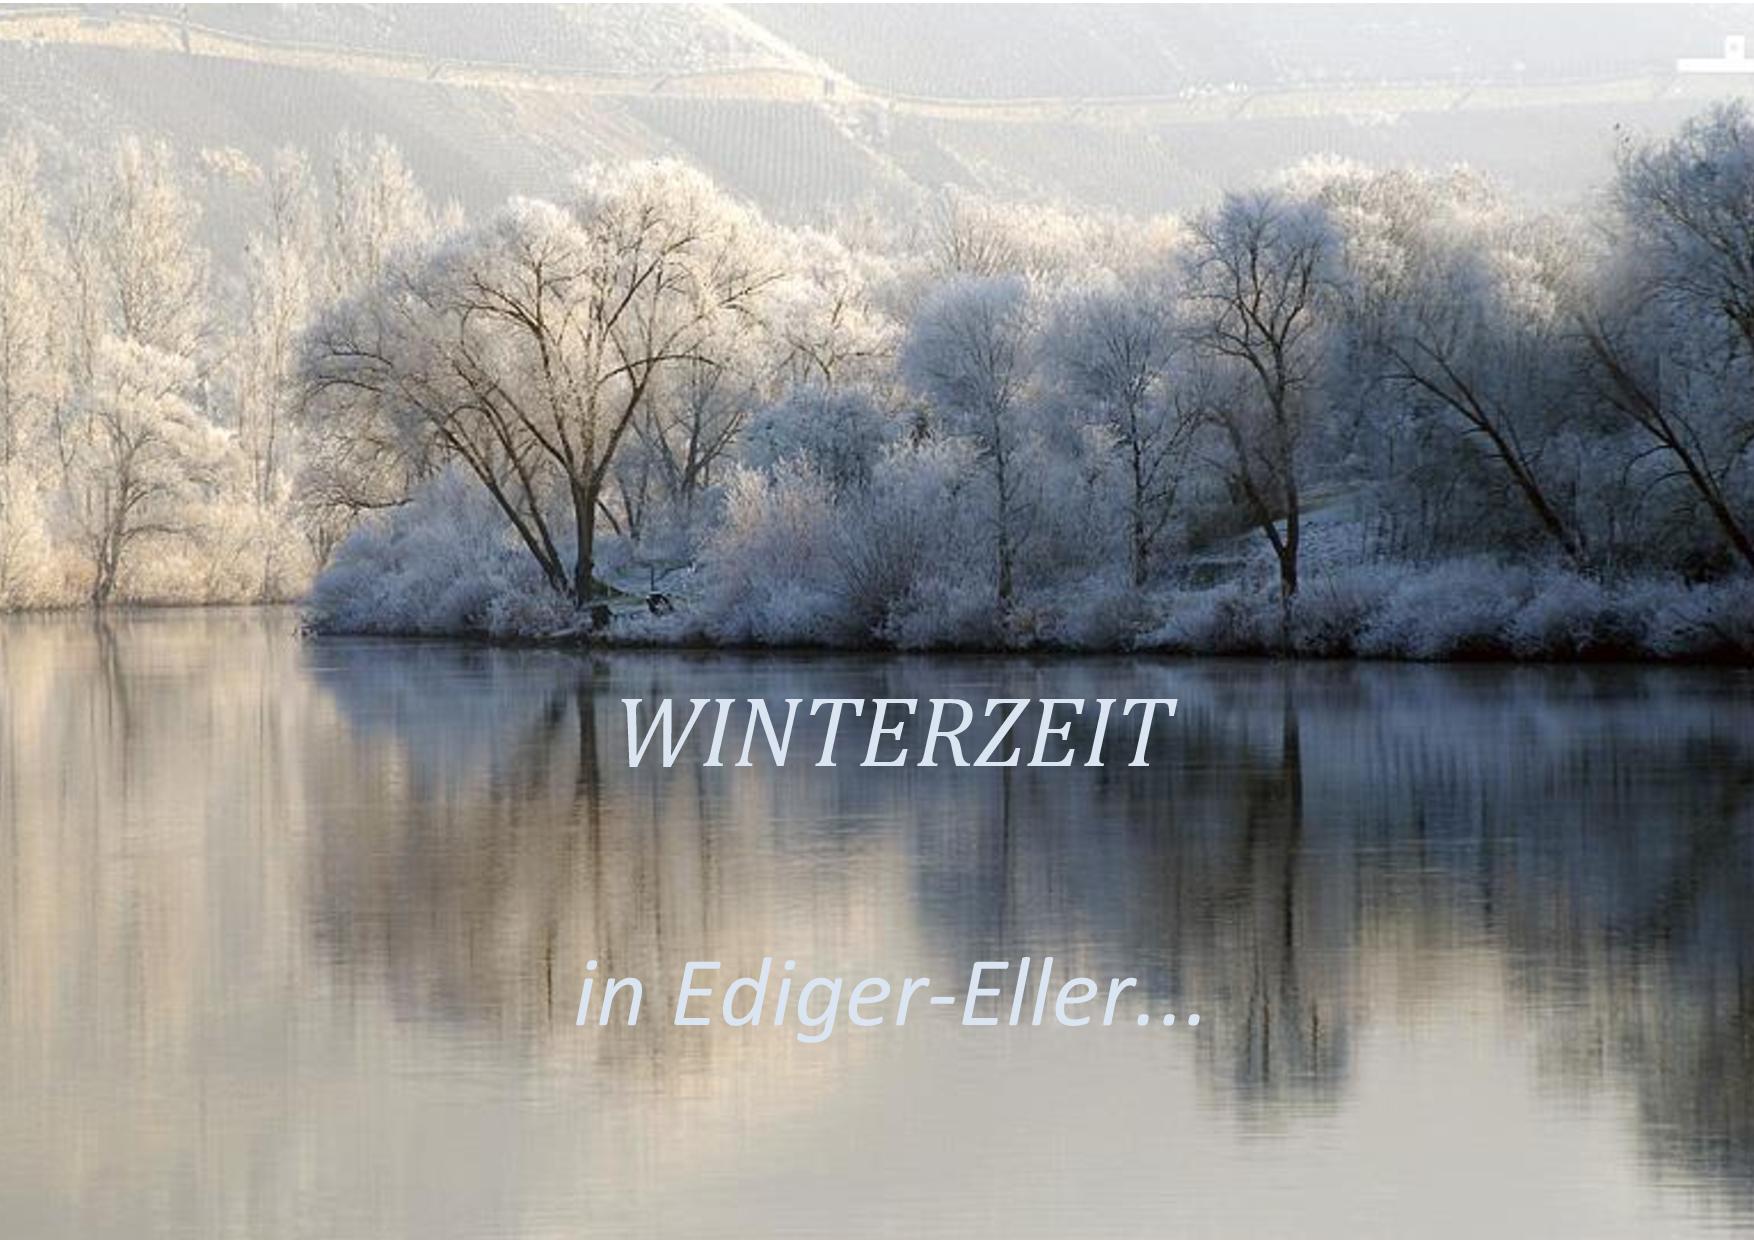 Winterzeit in Ediger-Eller 2022 2023